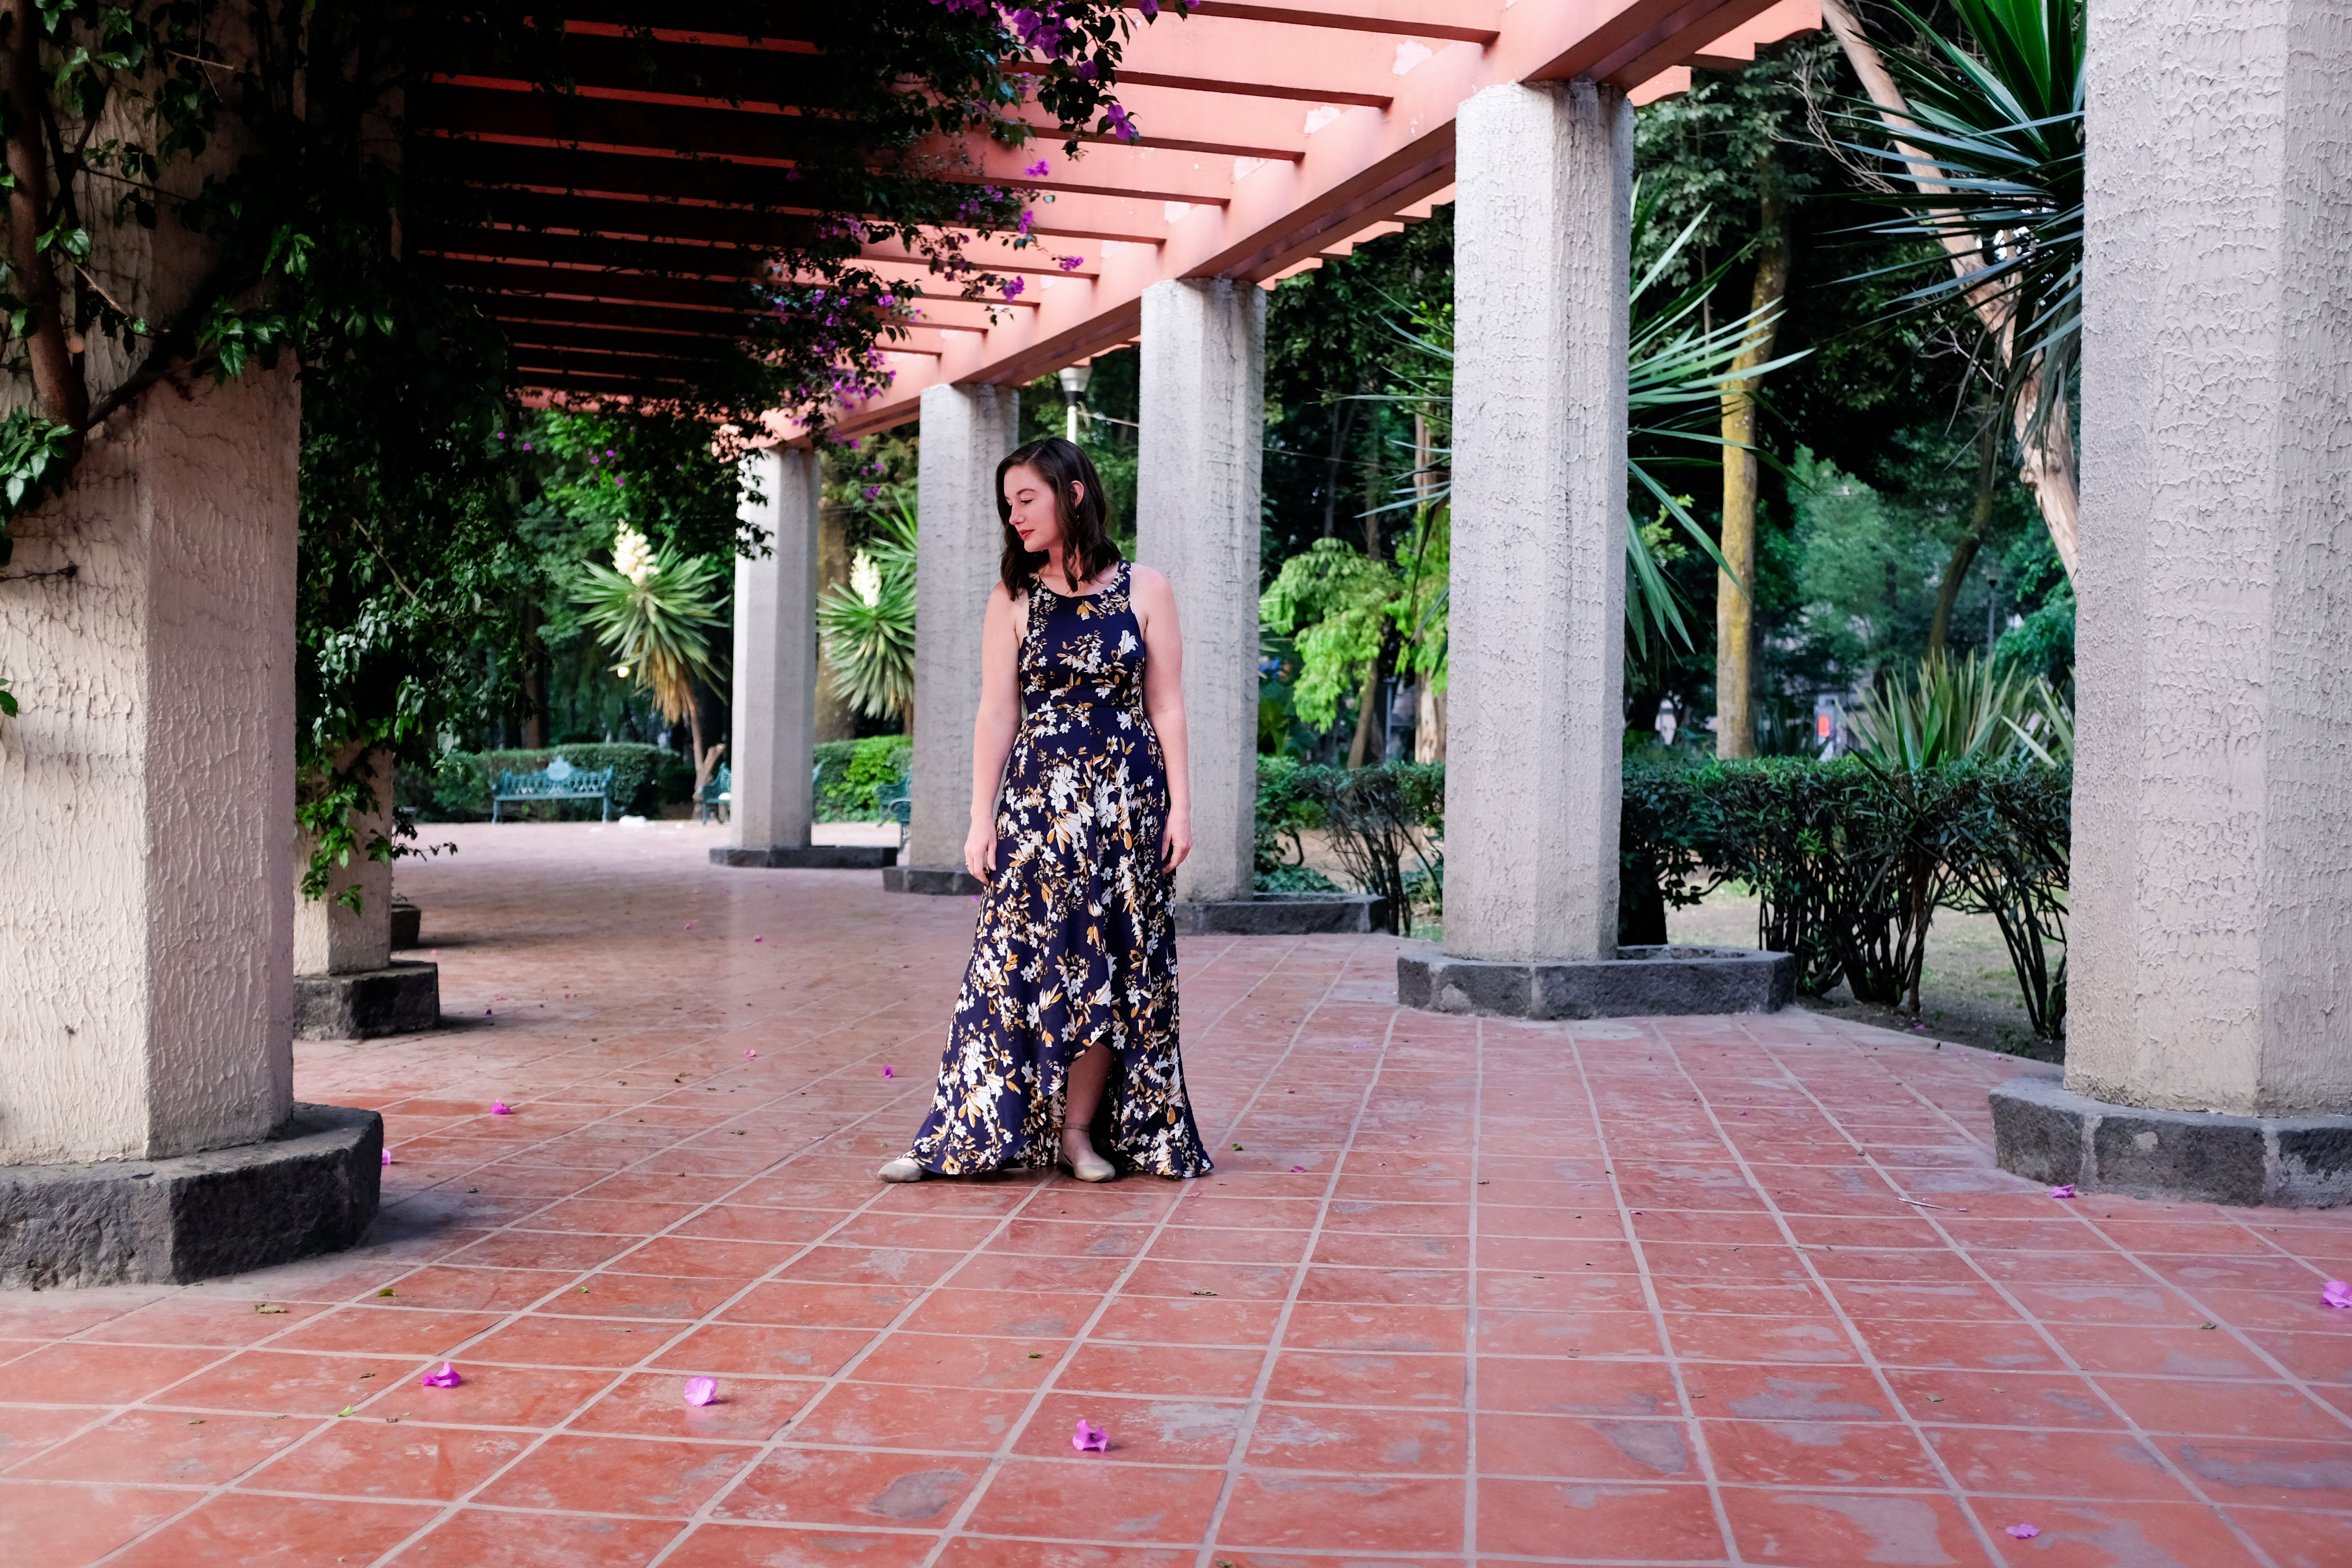 Alyssa wears a floral dress and walks through Parque Mexico 